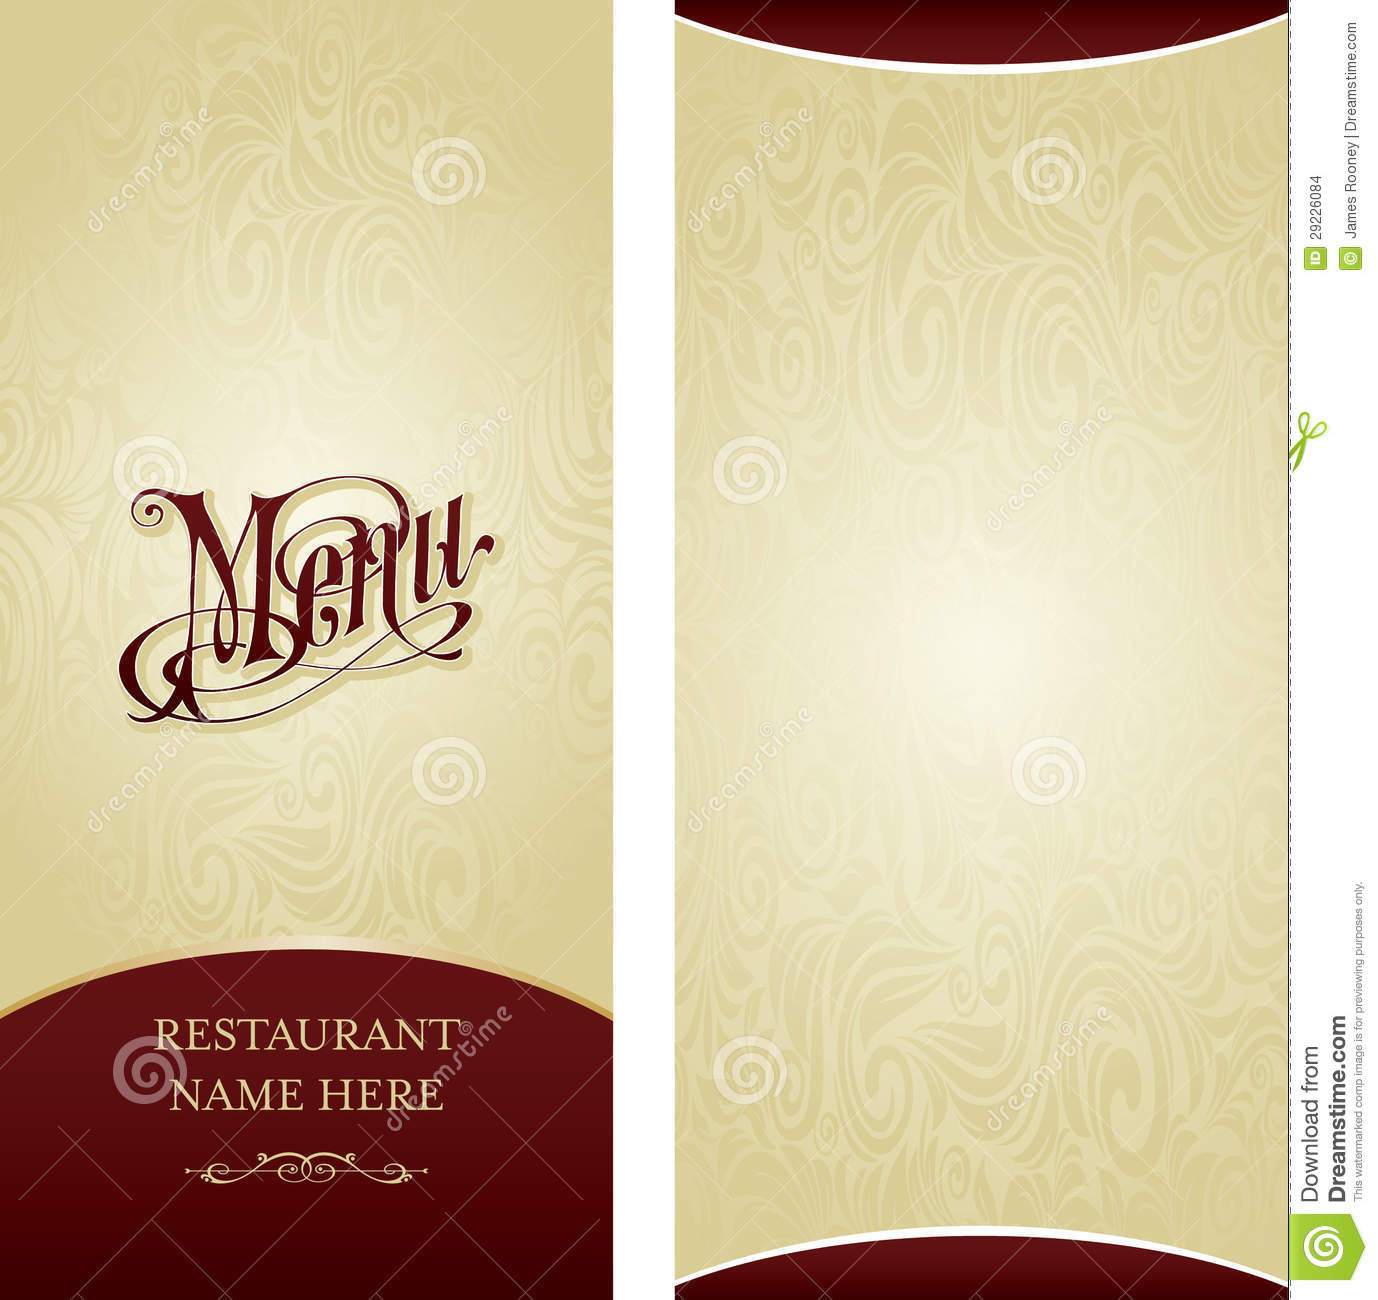 13-menu-design-samples-images-restaurant-menu-examples-restaurant